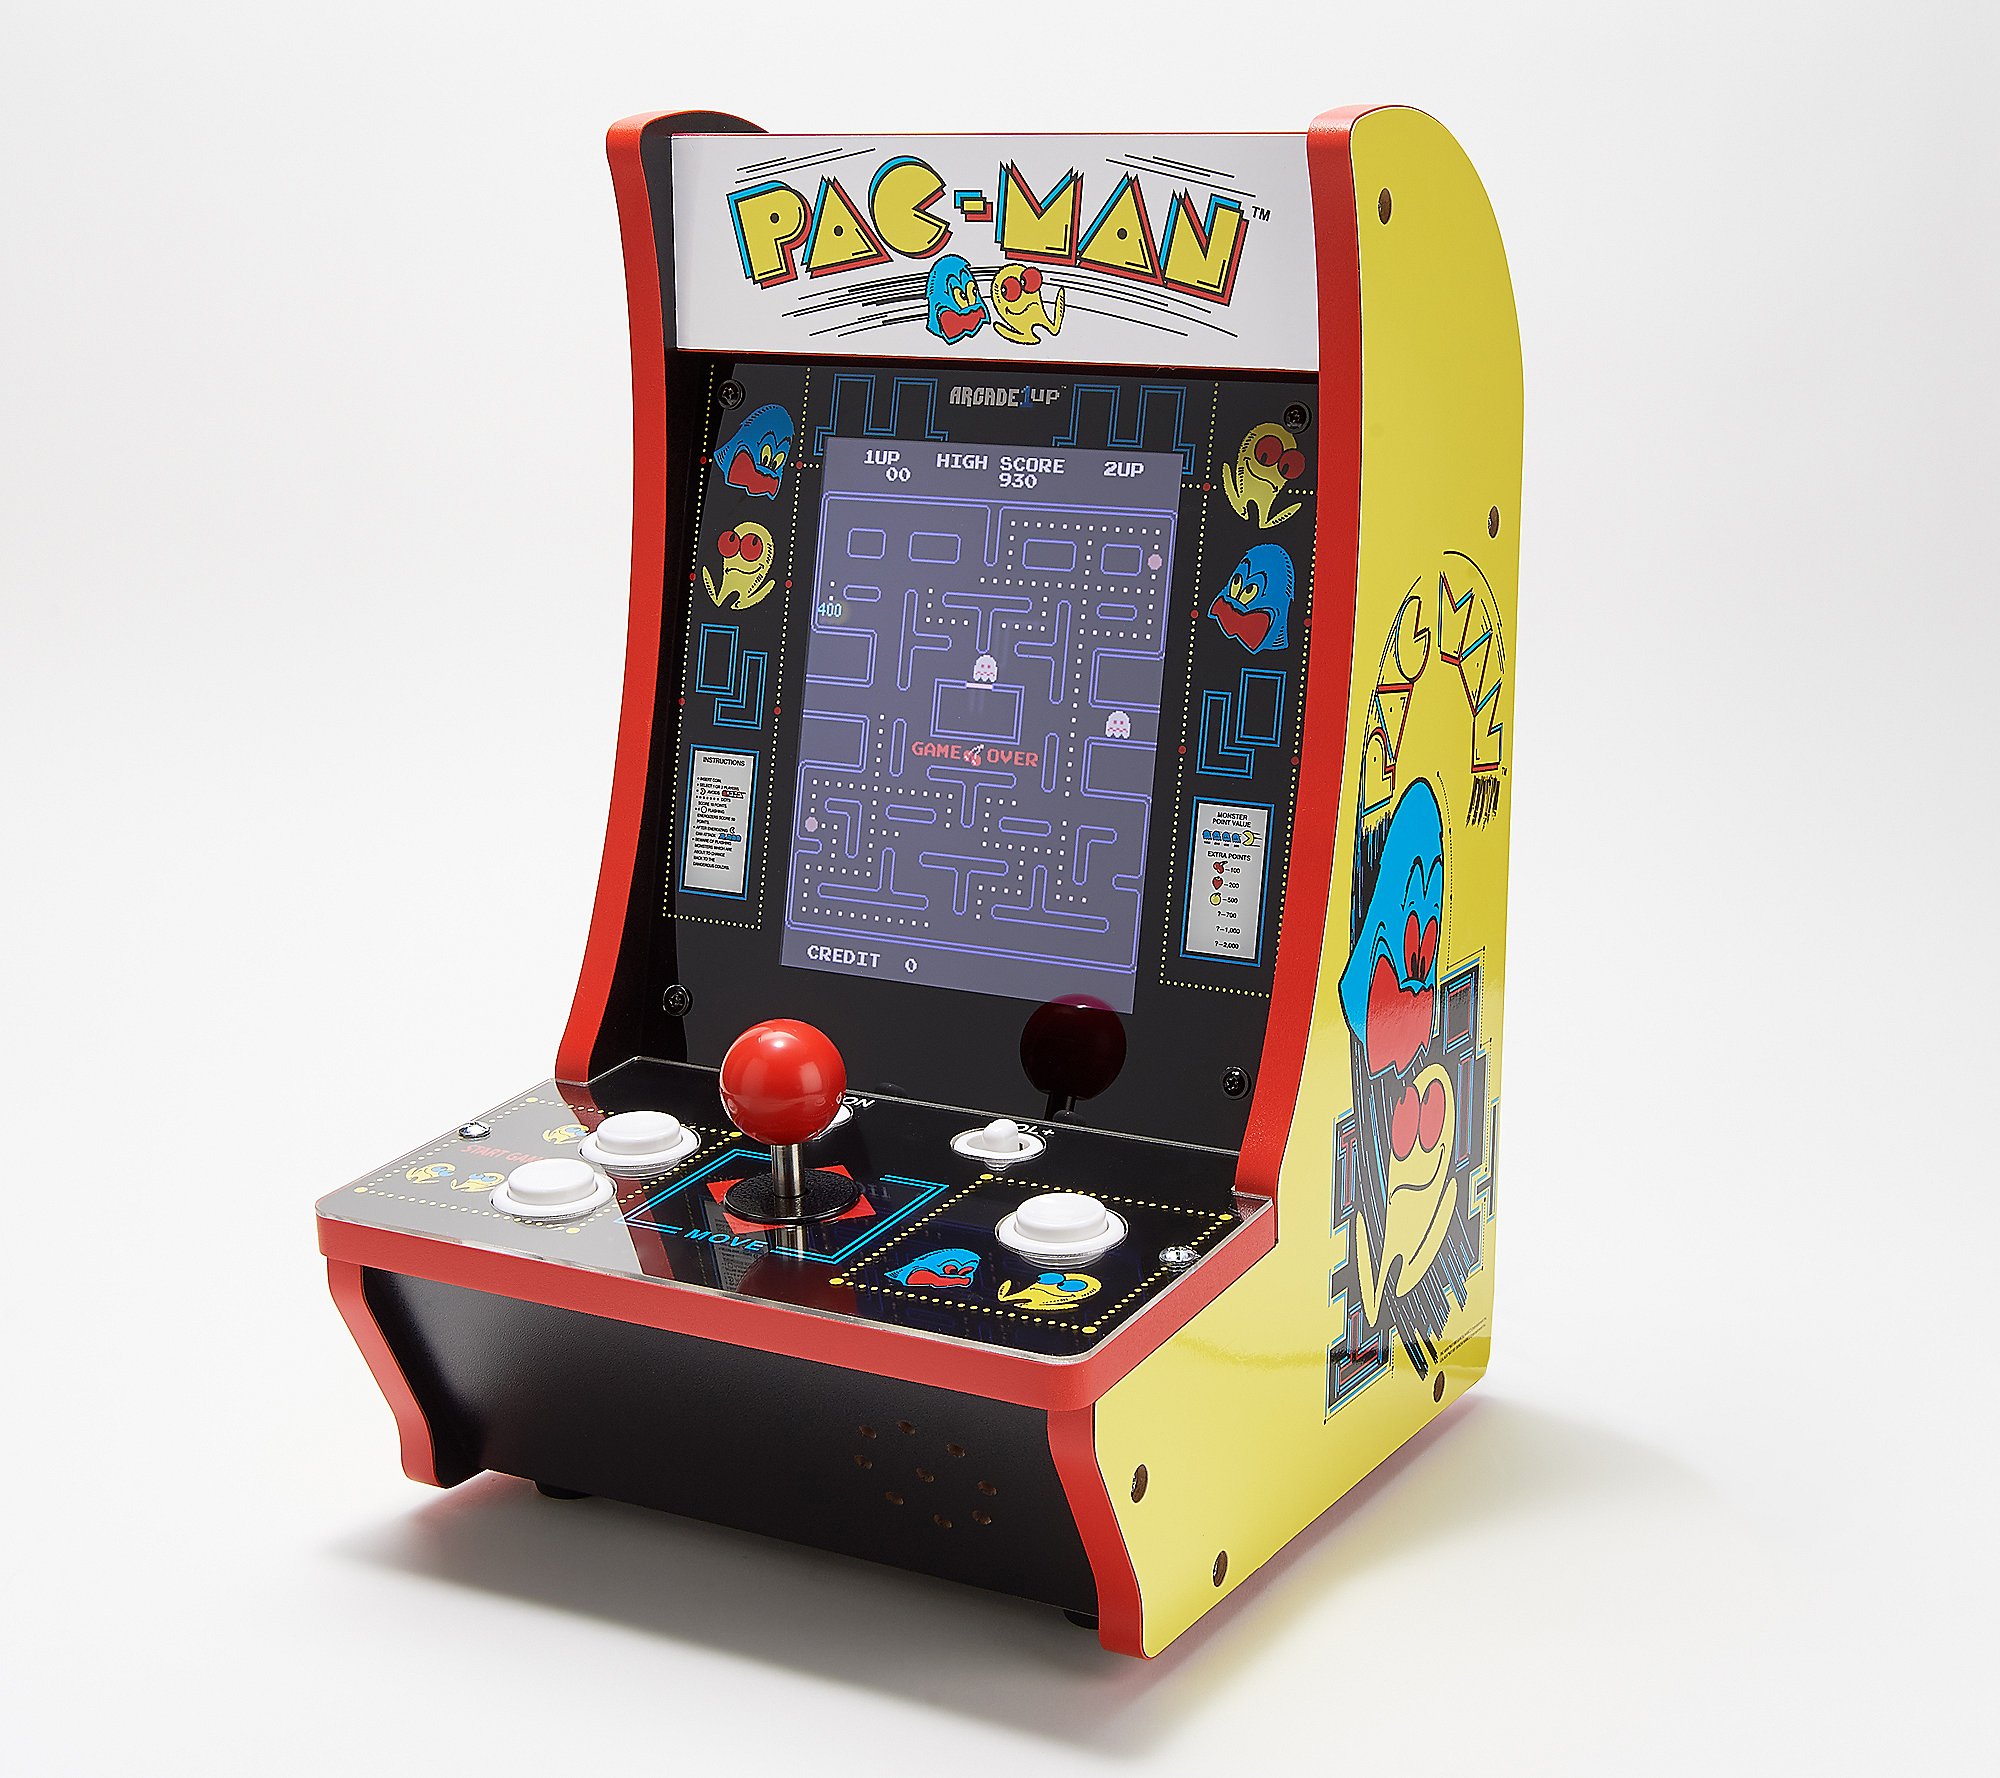 Arcade1Up Choice of Games Countercade Tabletop Home Arcade Machine - QVC